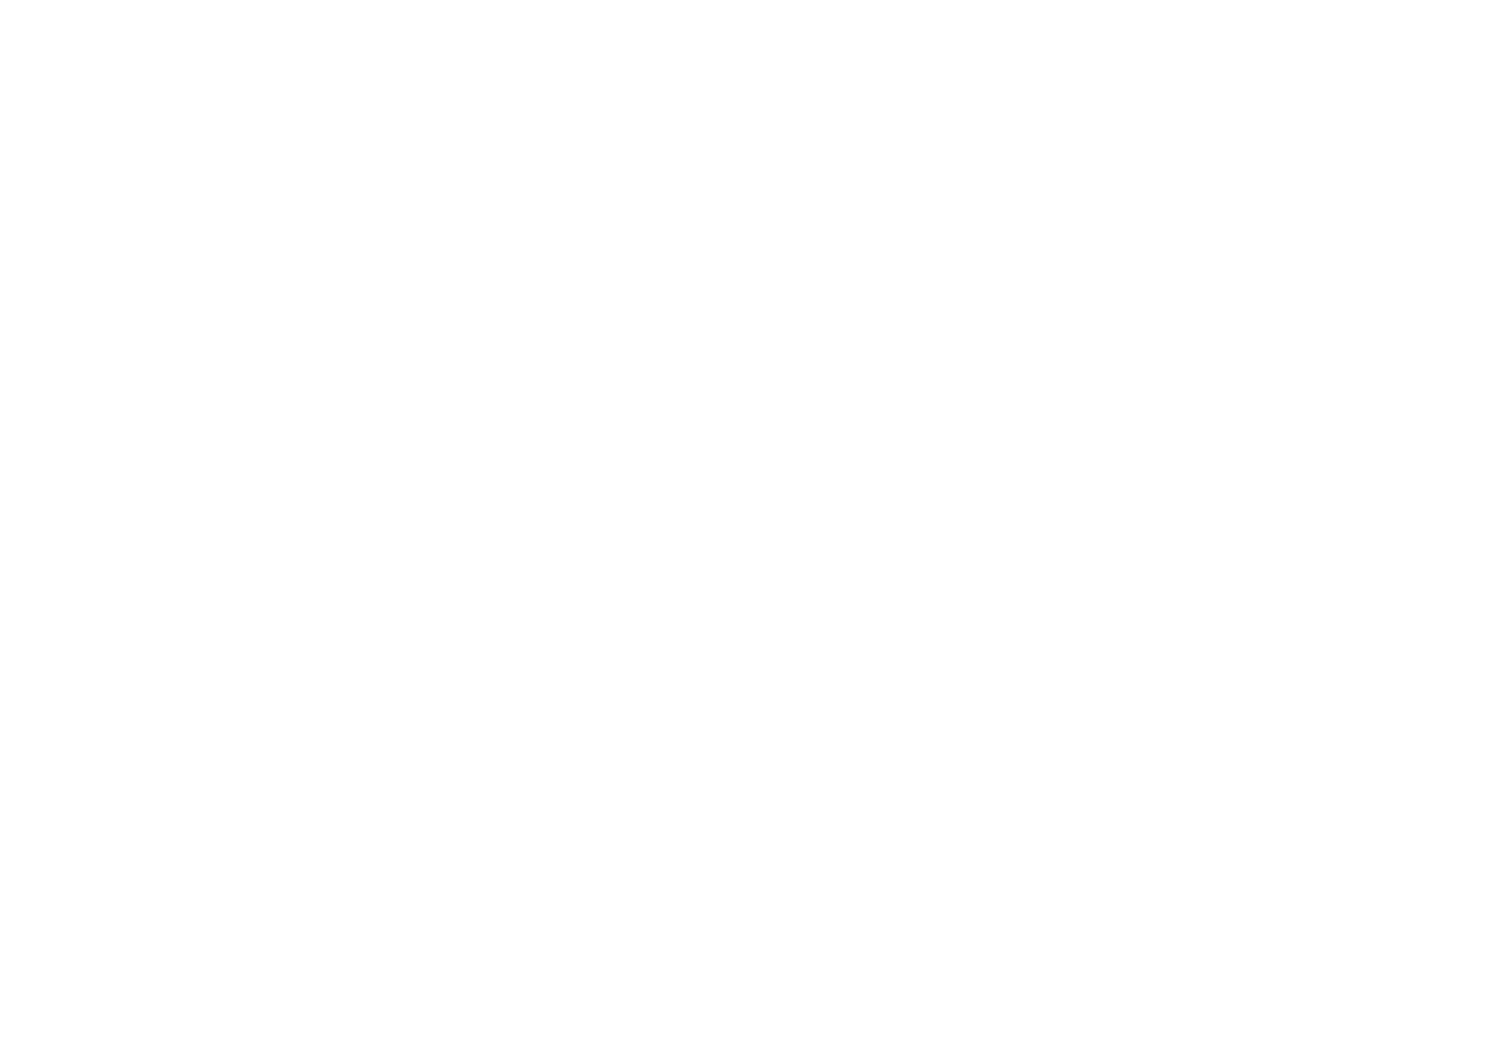 Feudo Arcuria